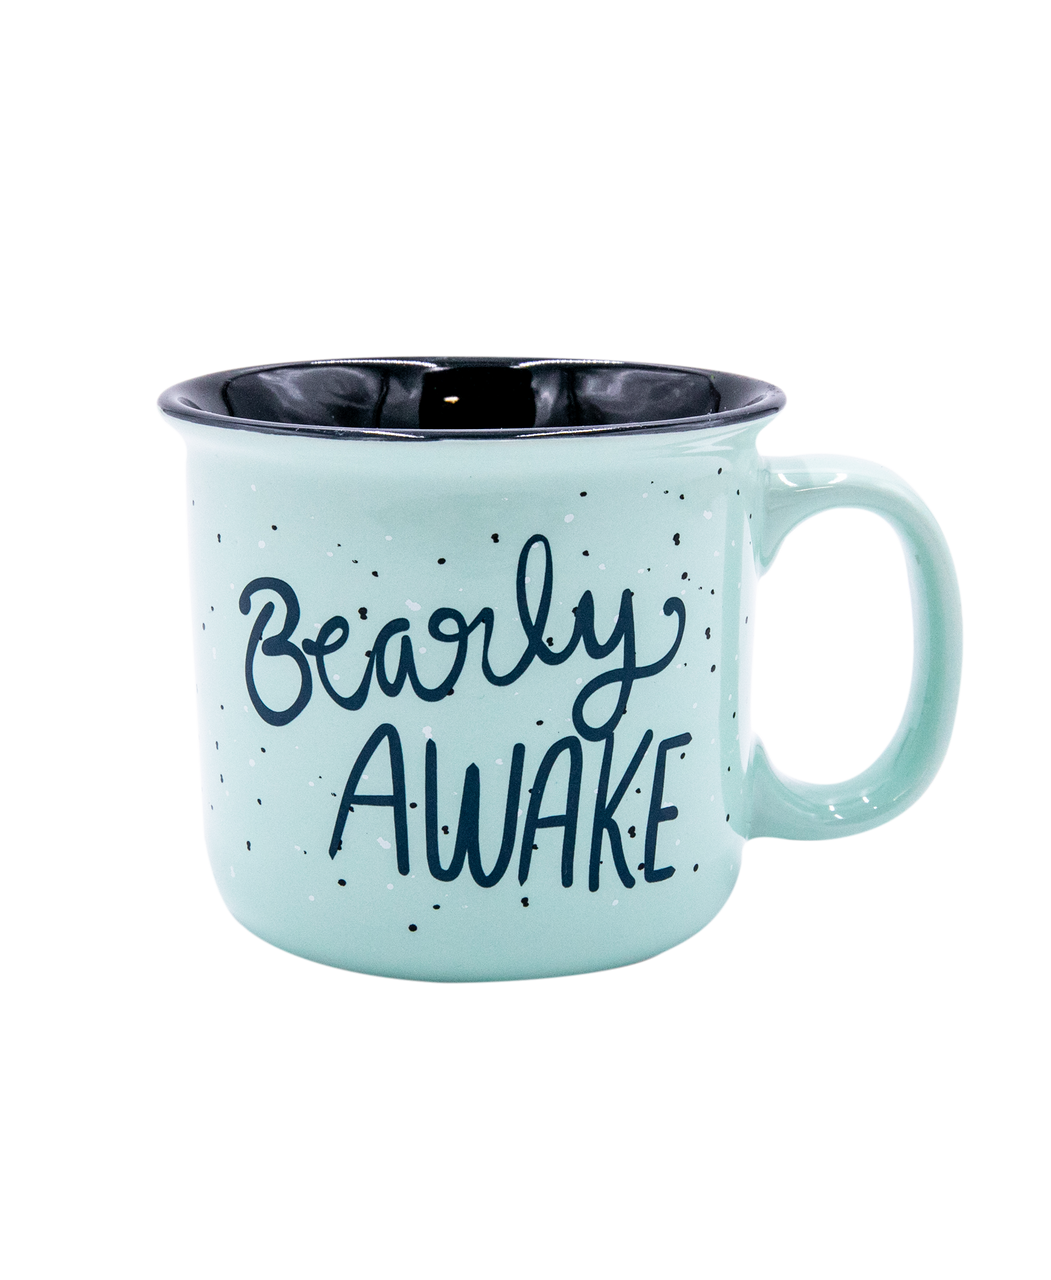 Bearly Awake 20 Oz. Ceramic Camper Mug - Cracker Barrel